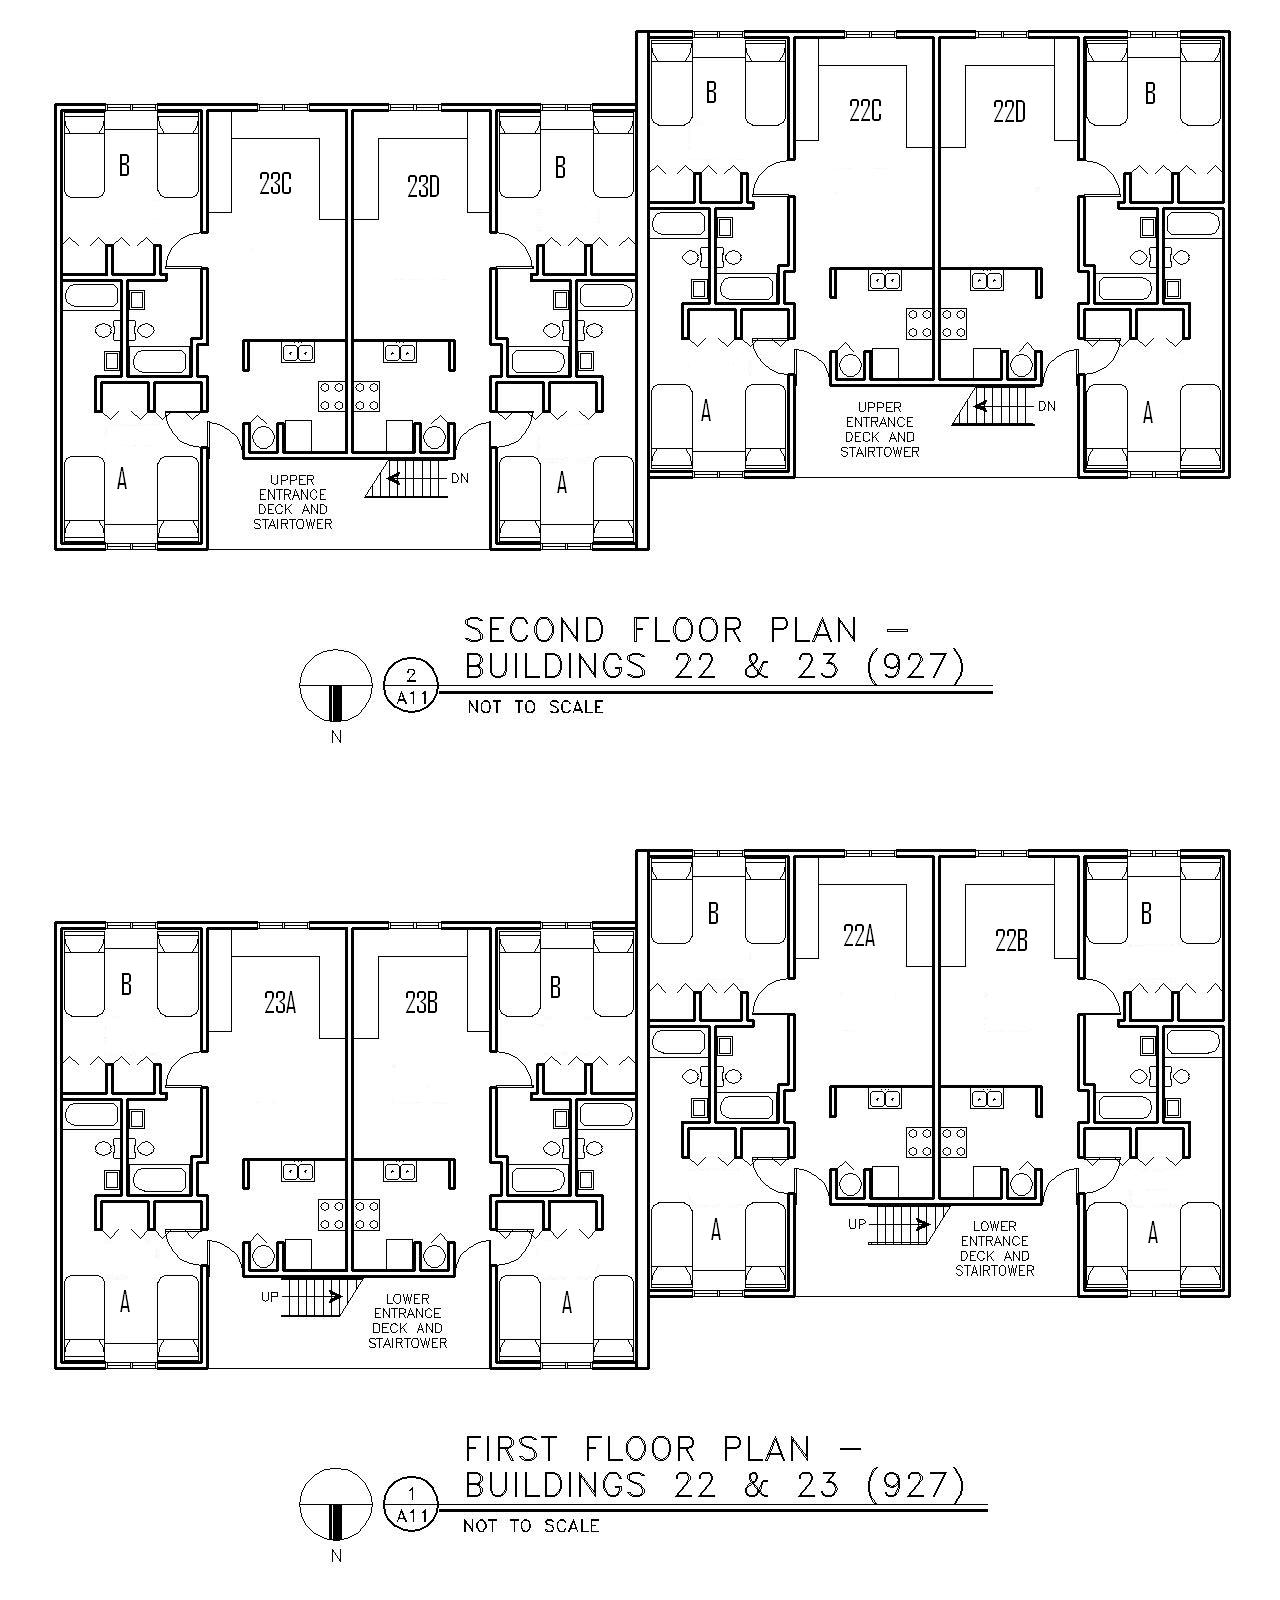 Floor Plan for Buildings 22 & 23